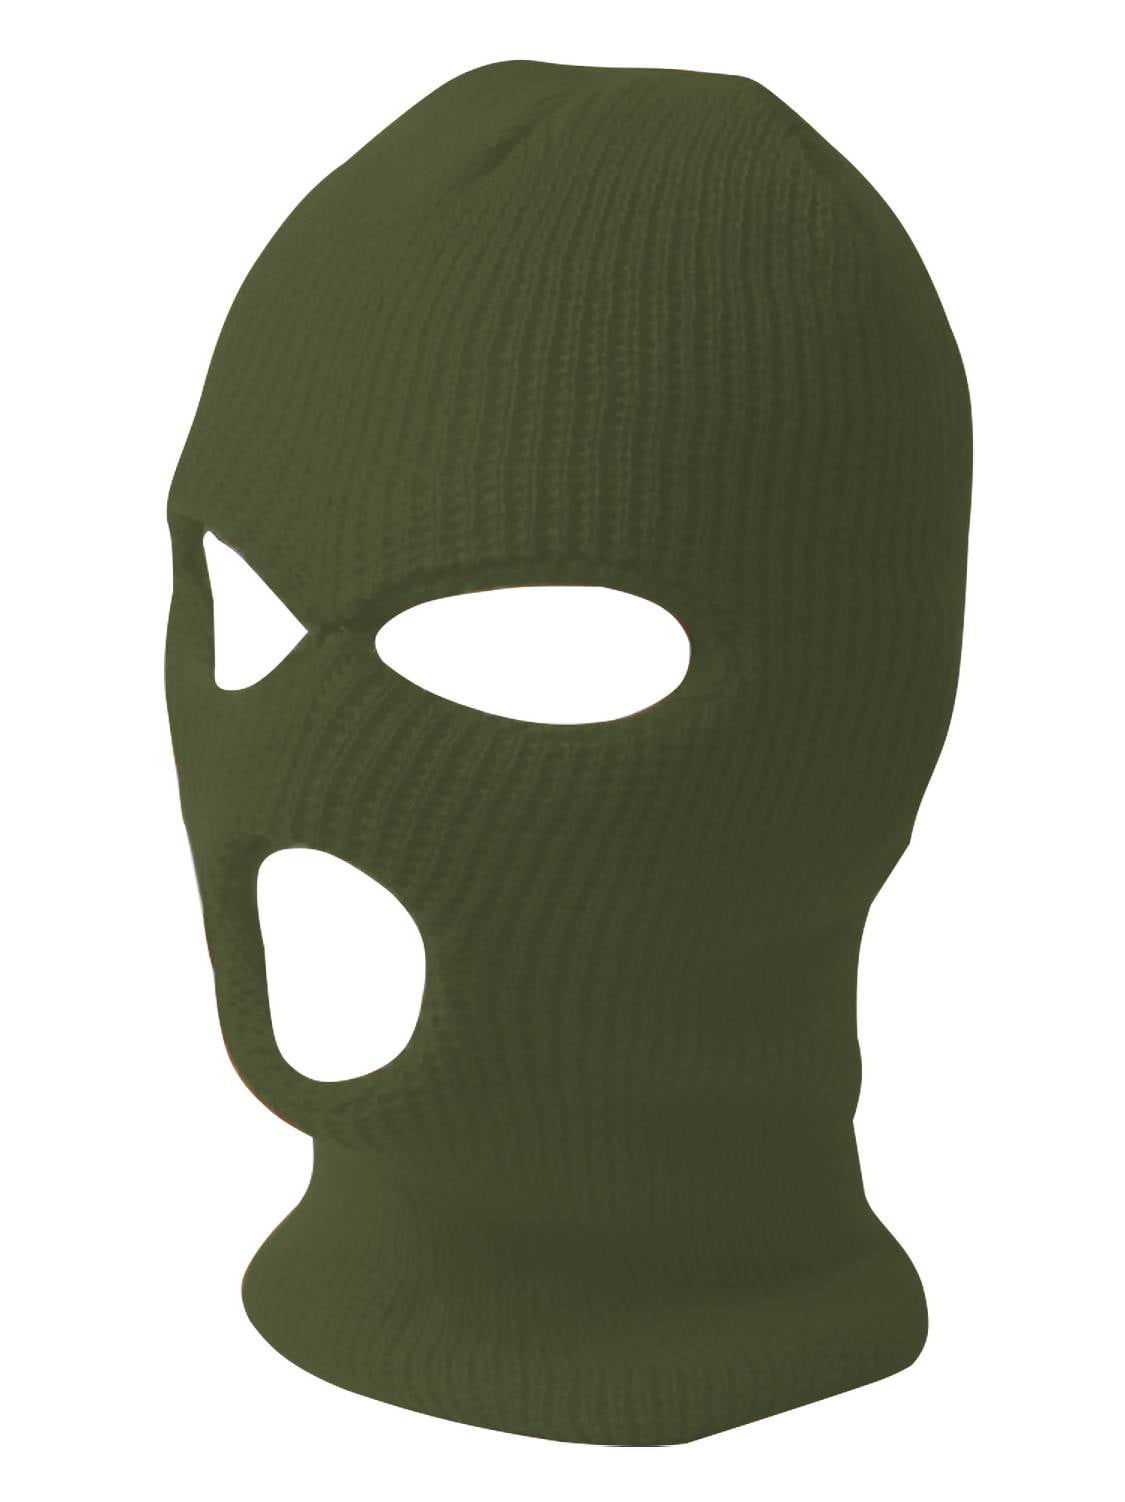 Download TopHeadwear - TopHeadwear's 3 Hole Face Ski Mask, Olive ...